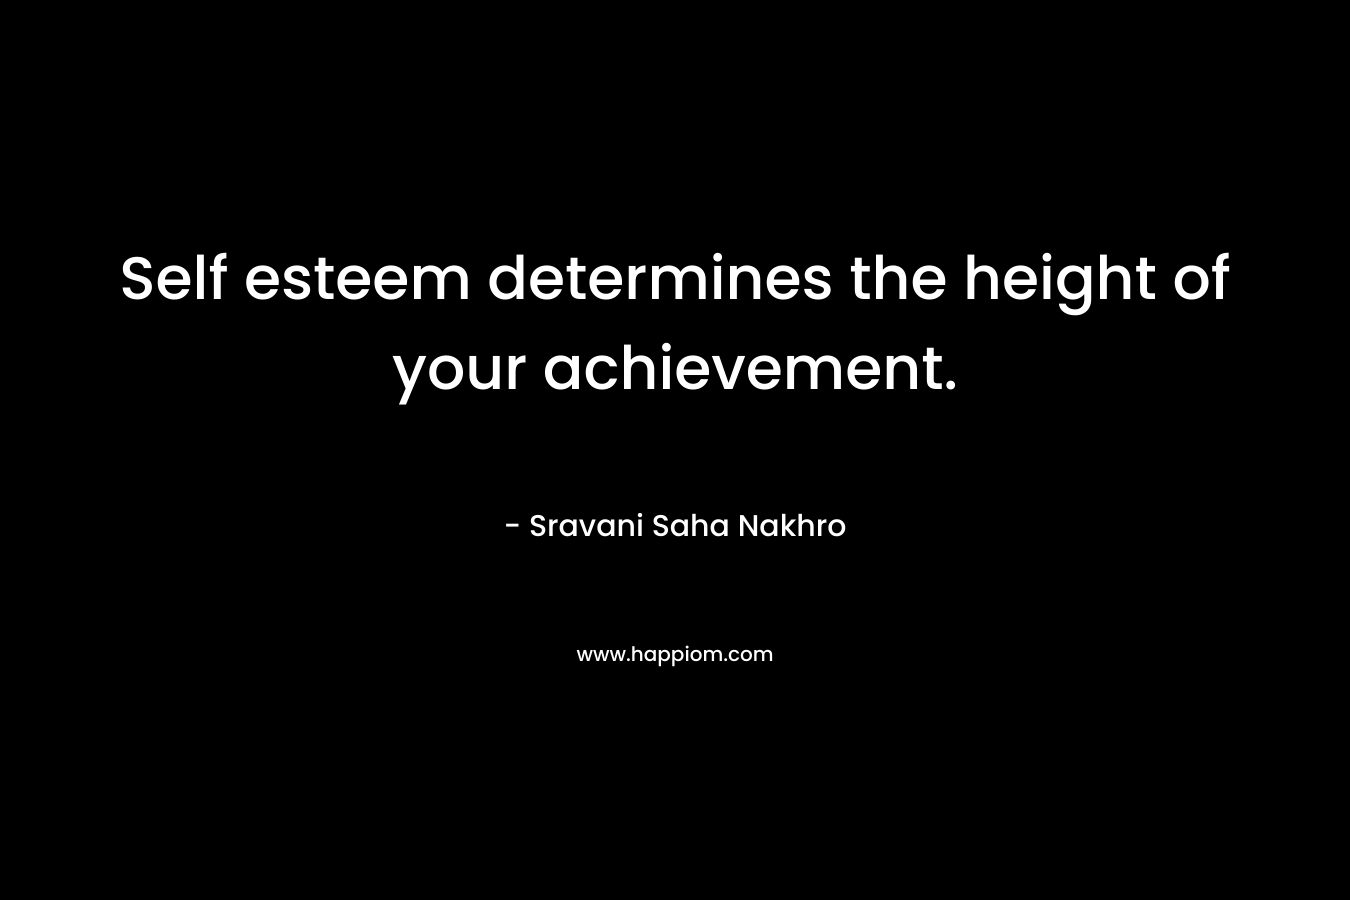 Self esteem determines the height of your achievement. – Sravani Saha Nakhro